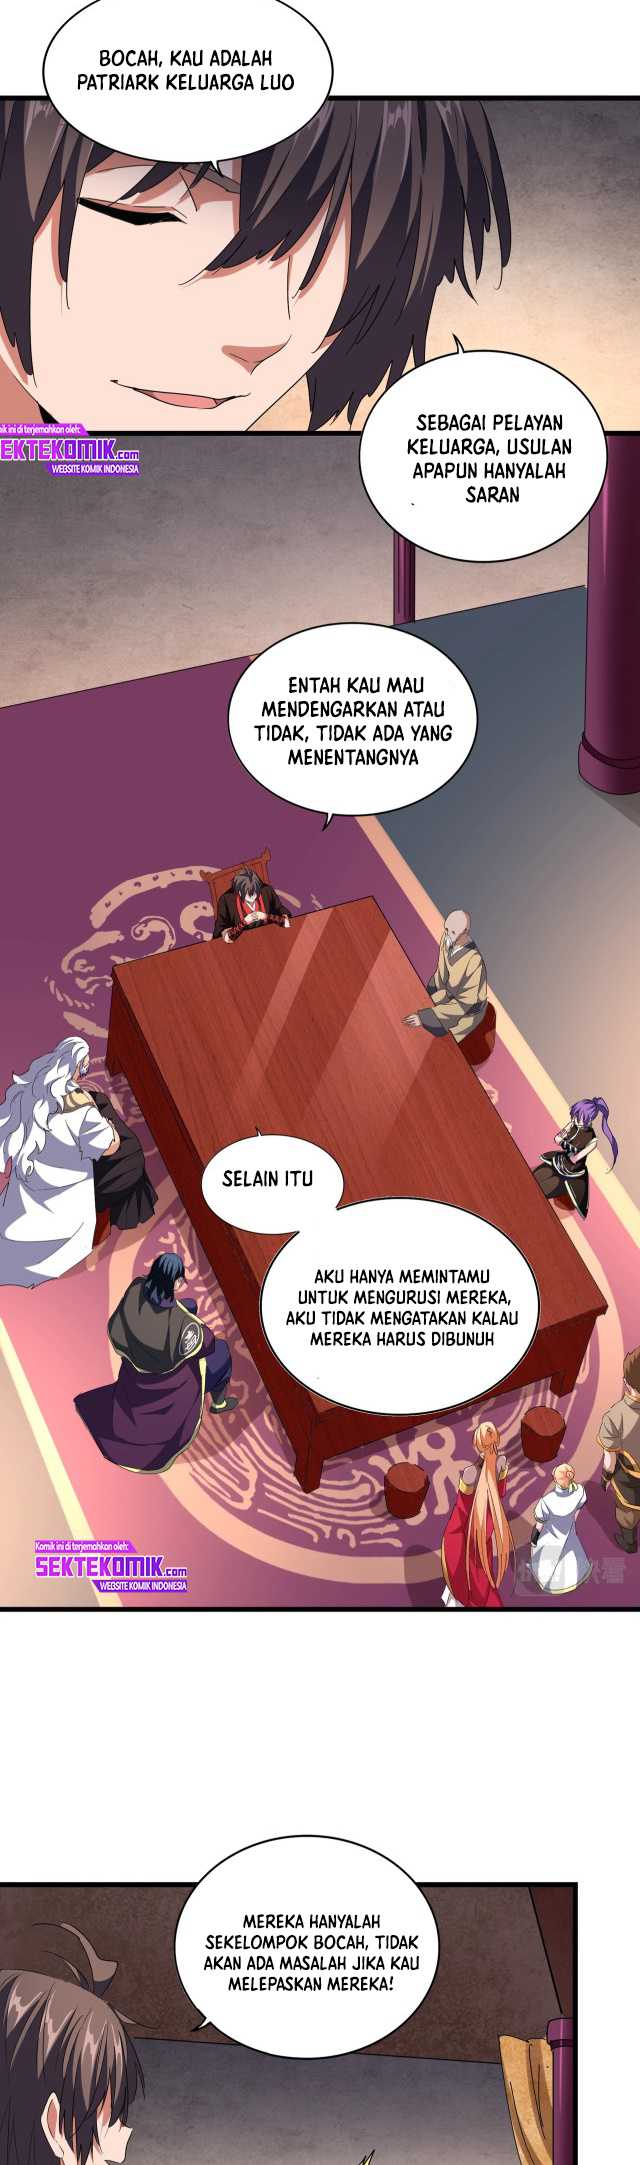 Magic Emperor Chapter 242 bahasa indonesia